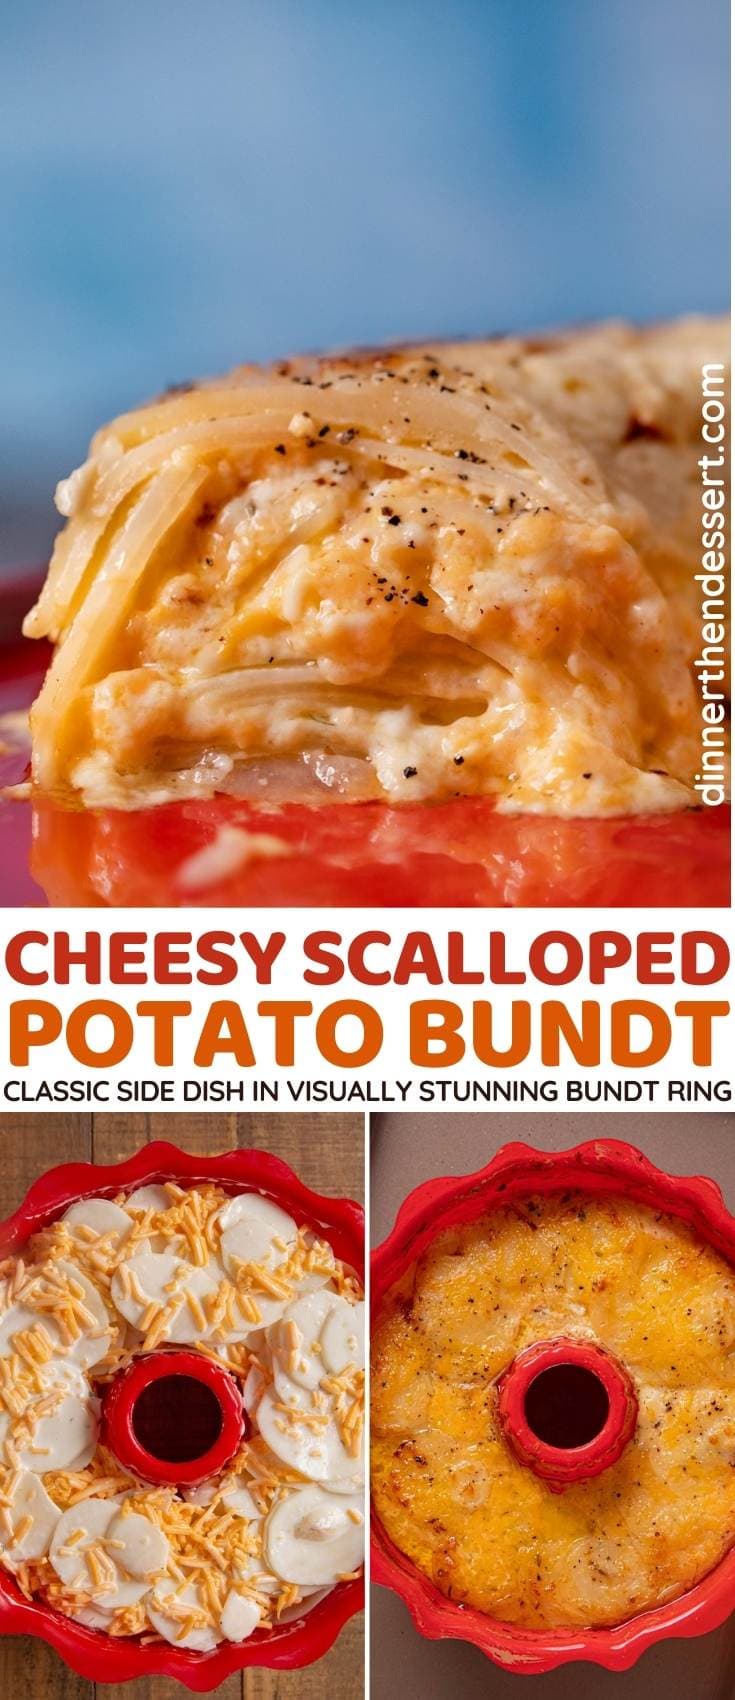 Scalloped Potato Bundt collage